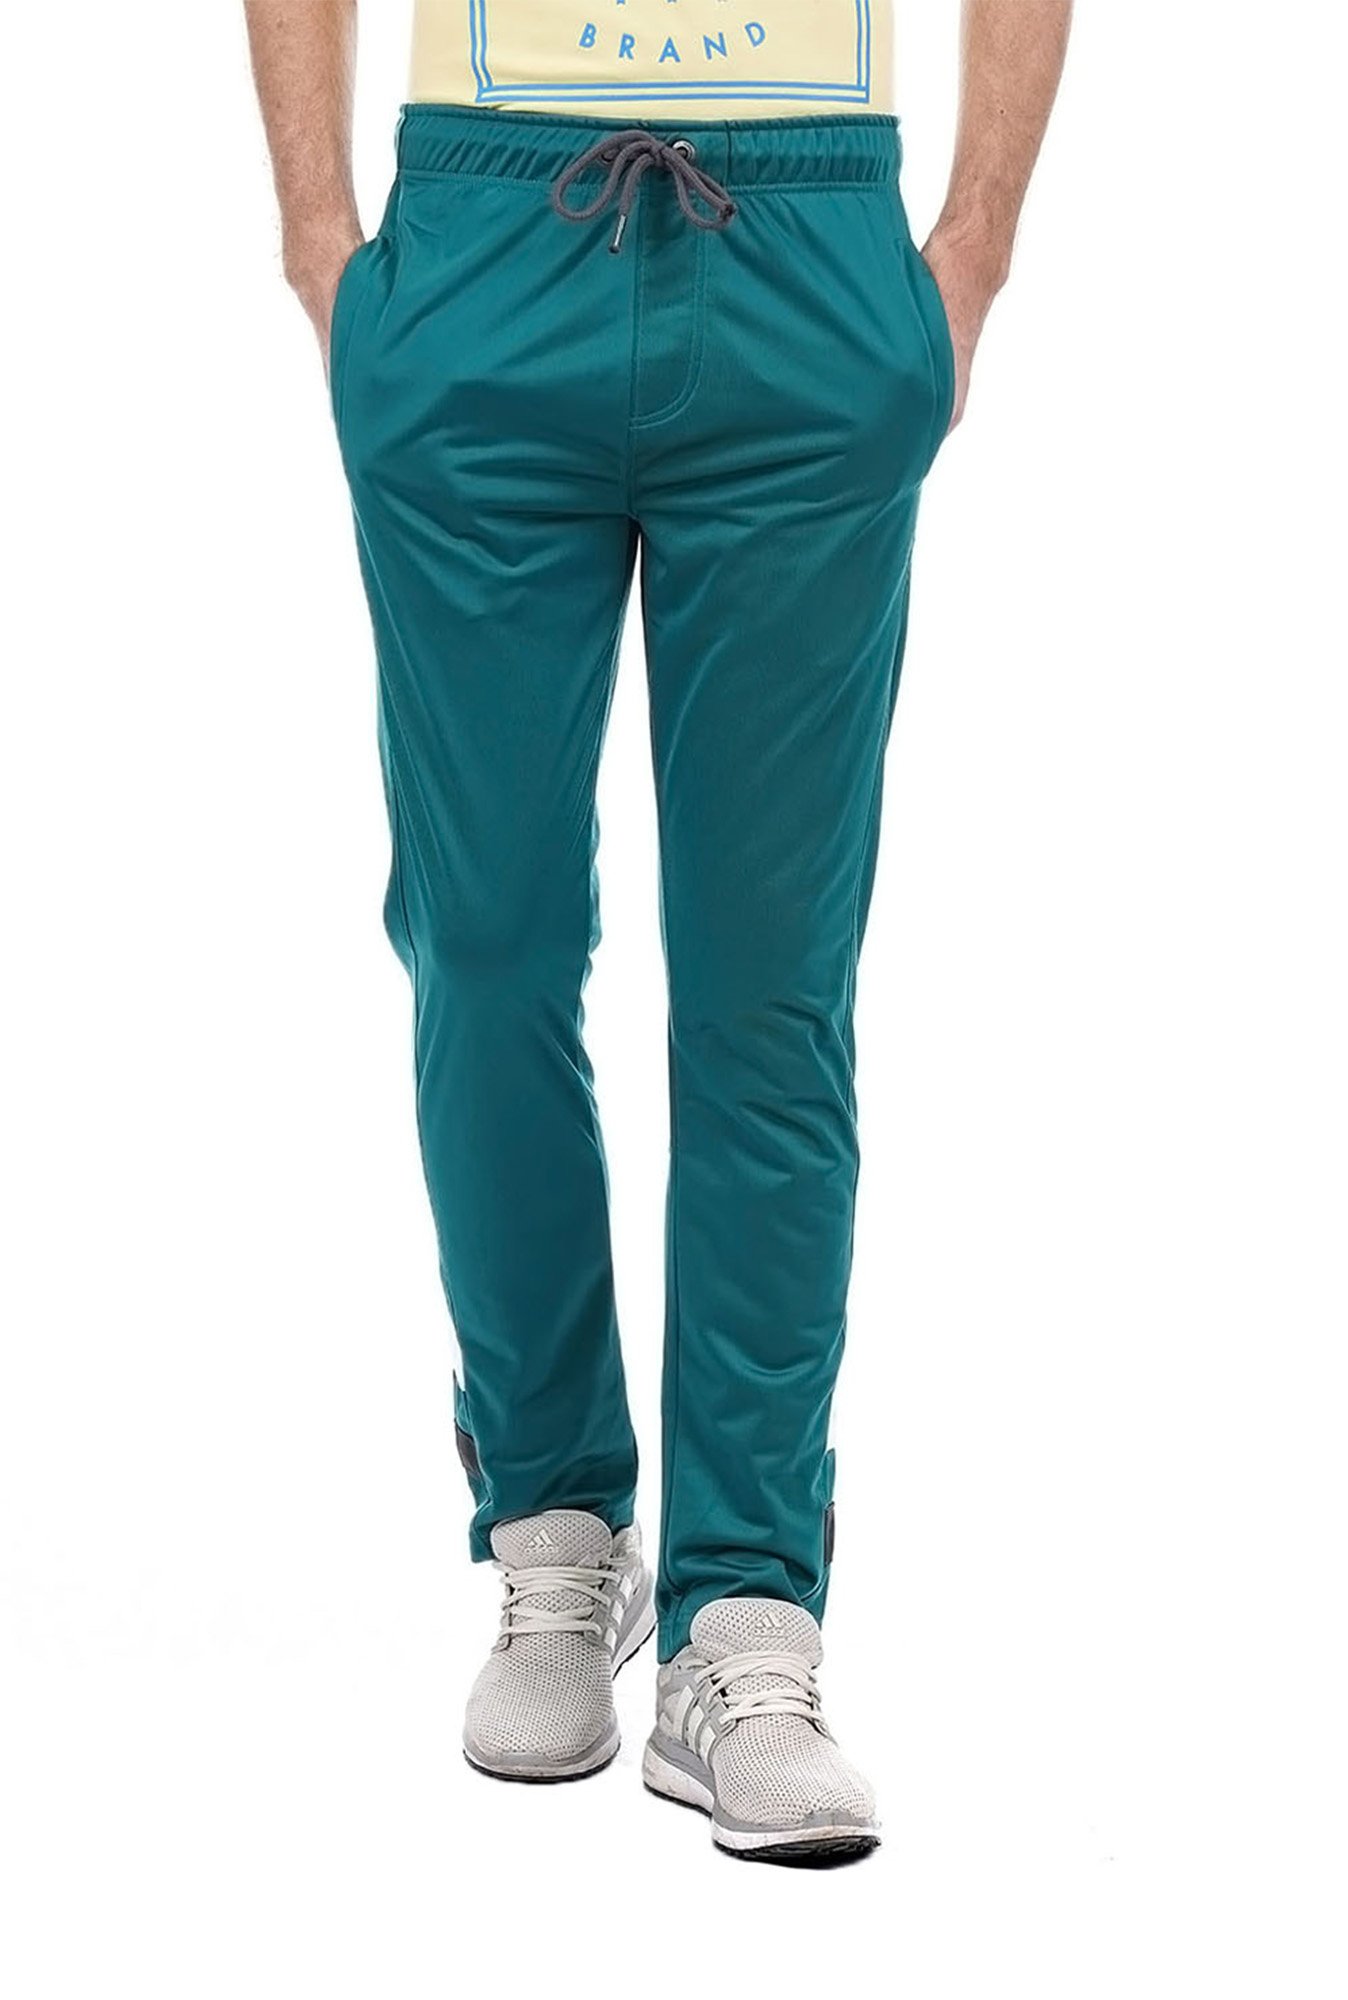 Buy C9 Cotton Track pants  Pista Green at Rs526 online  Activewear online